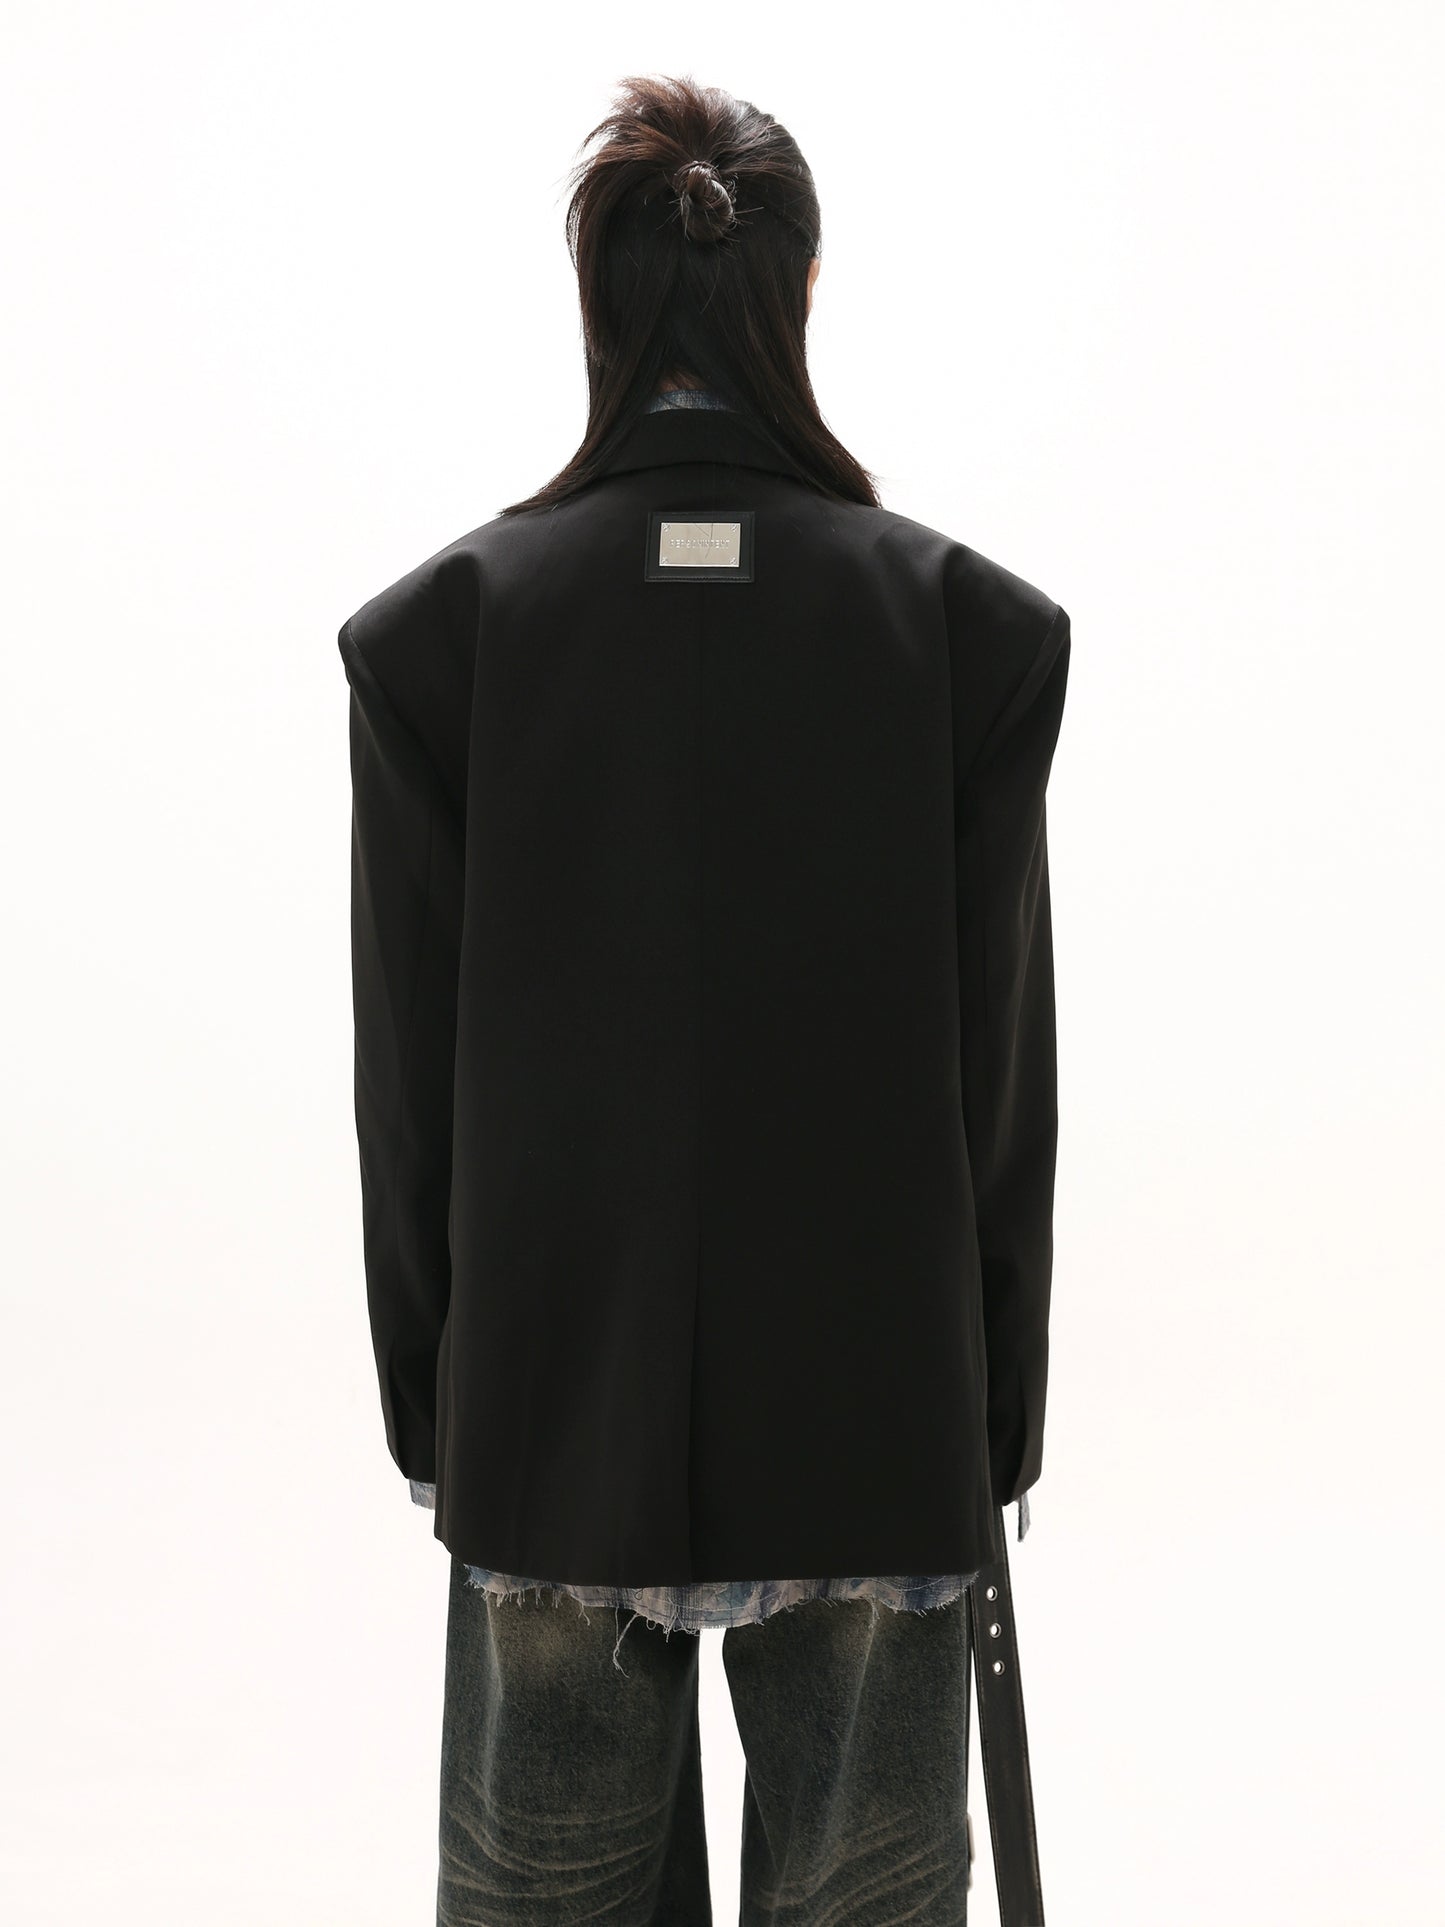 GIBBYCNA spring design sense lock suit ins korean version trend retro casual luxury jacket men